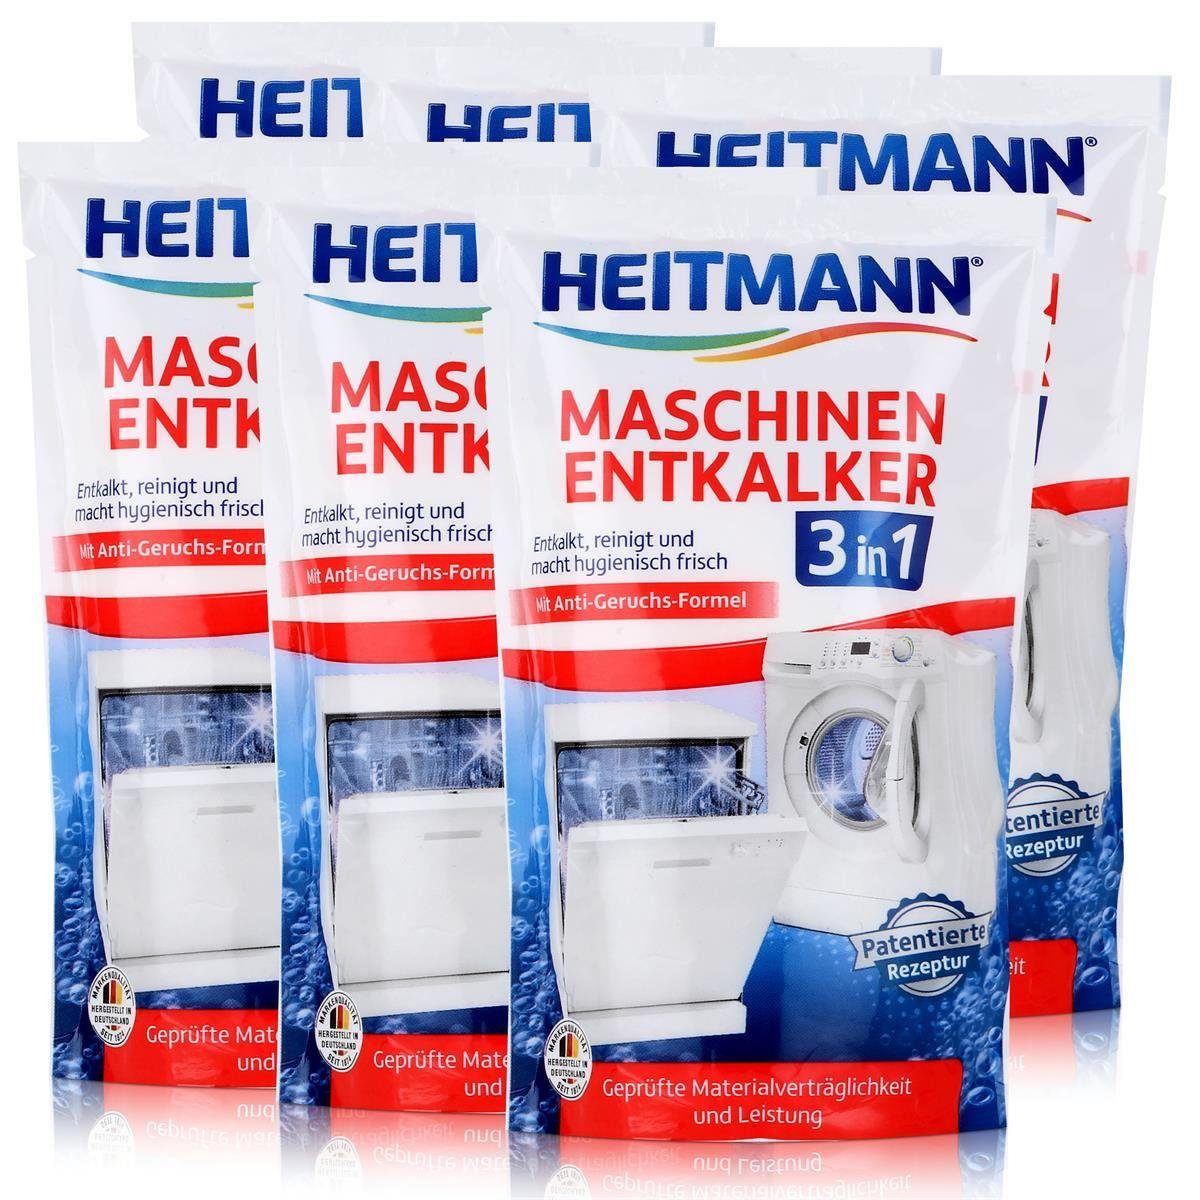 HEITMANN Heitmann Maschinen Entkalker 175g - Waschmaschinen und Geschirrspüler Spezialwaschmittel